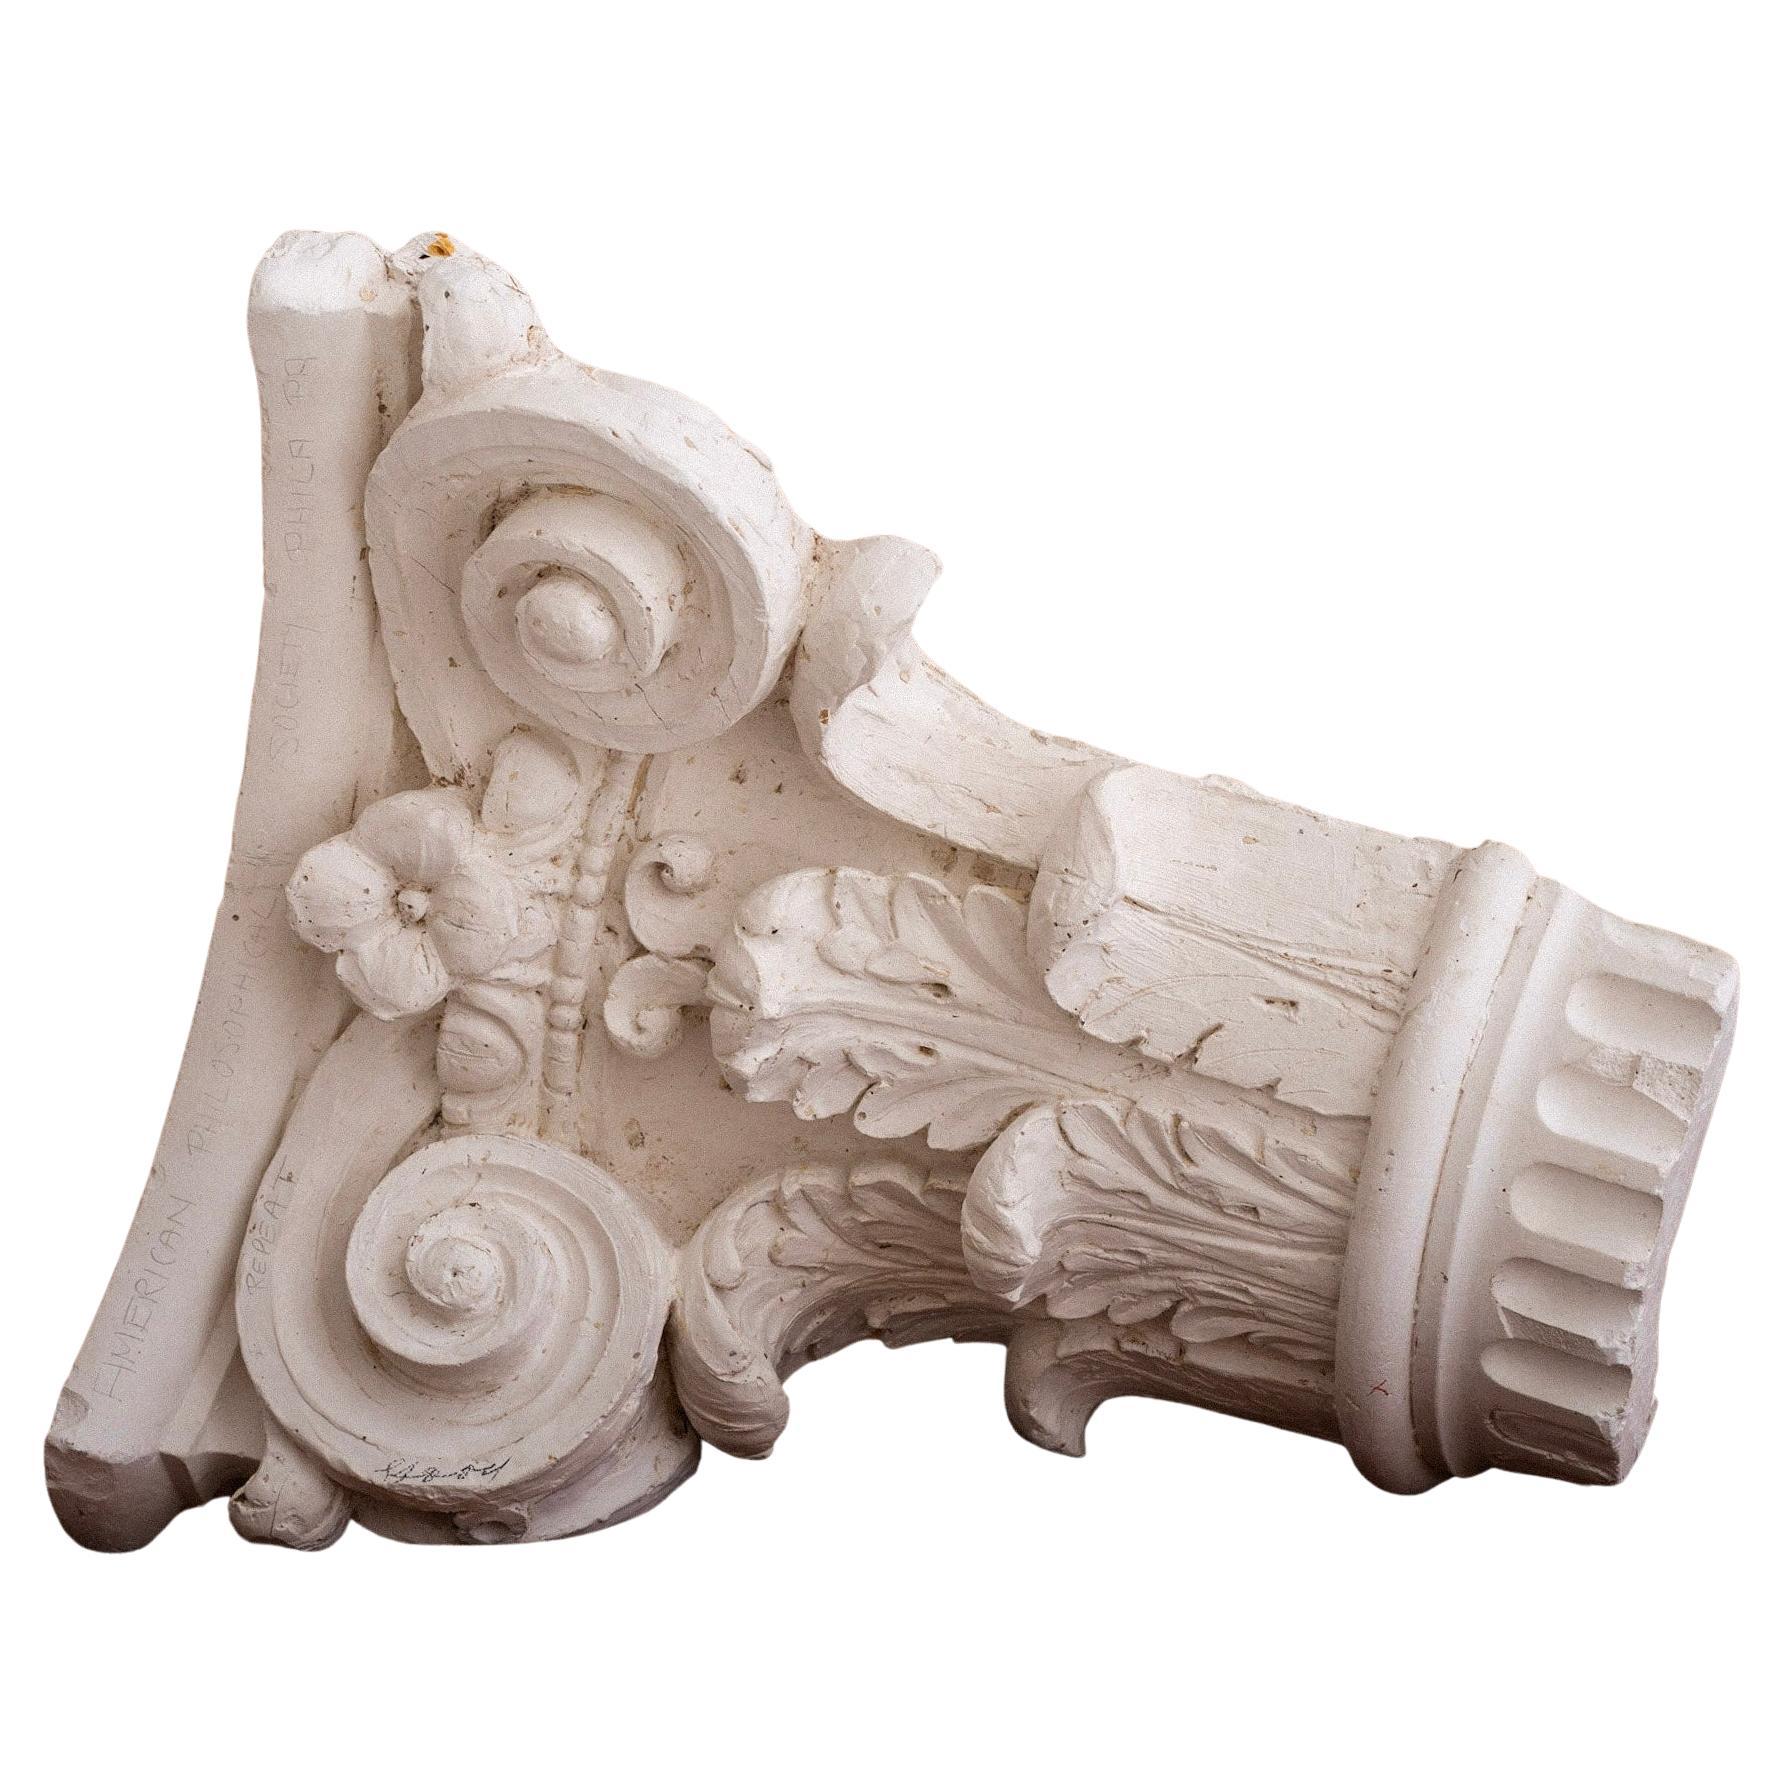 Corinithian Column Plaster Architectural Study Objet D’art For Sale